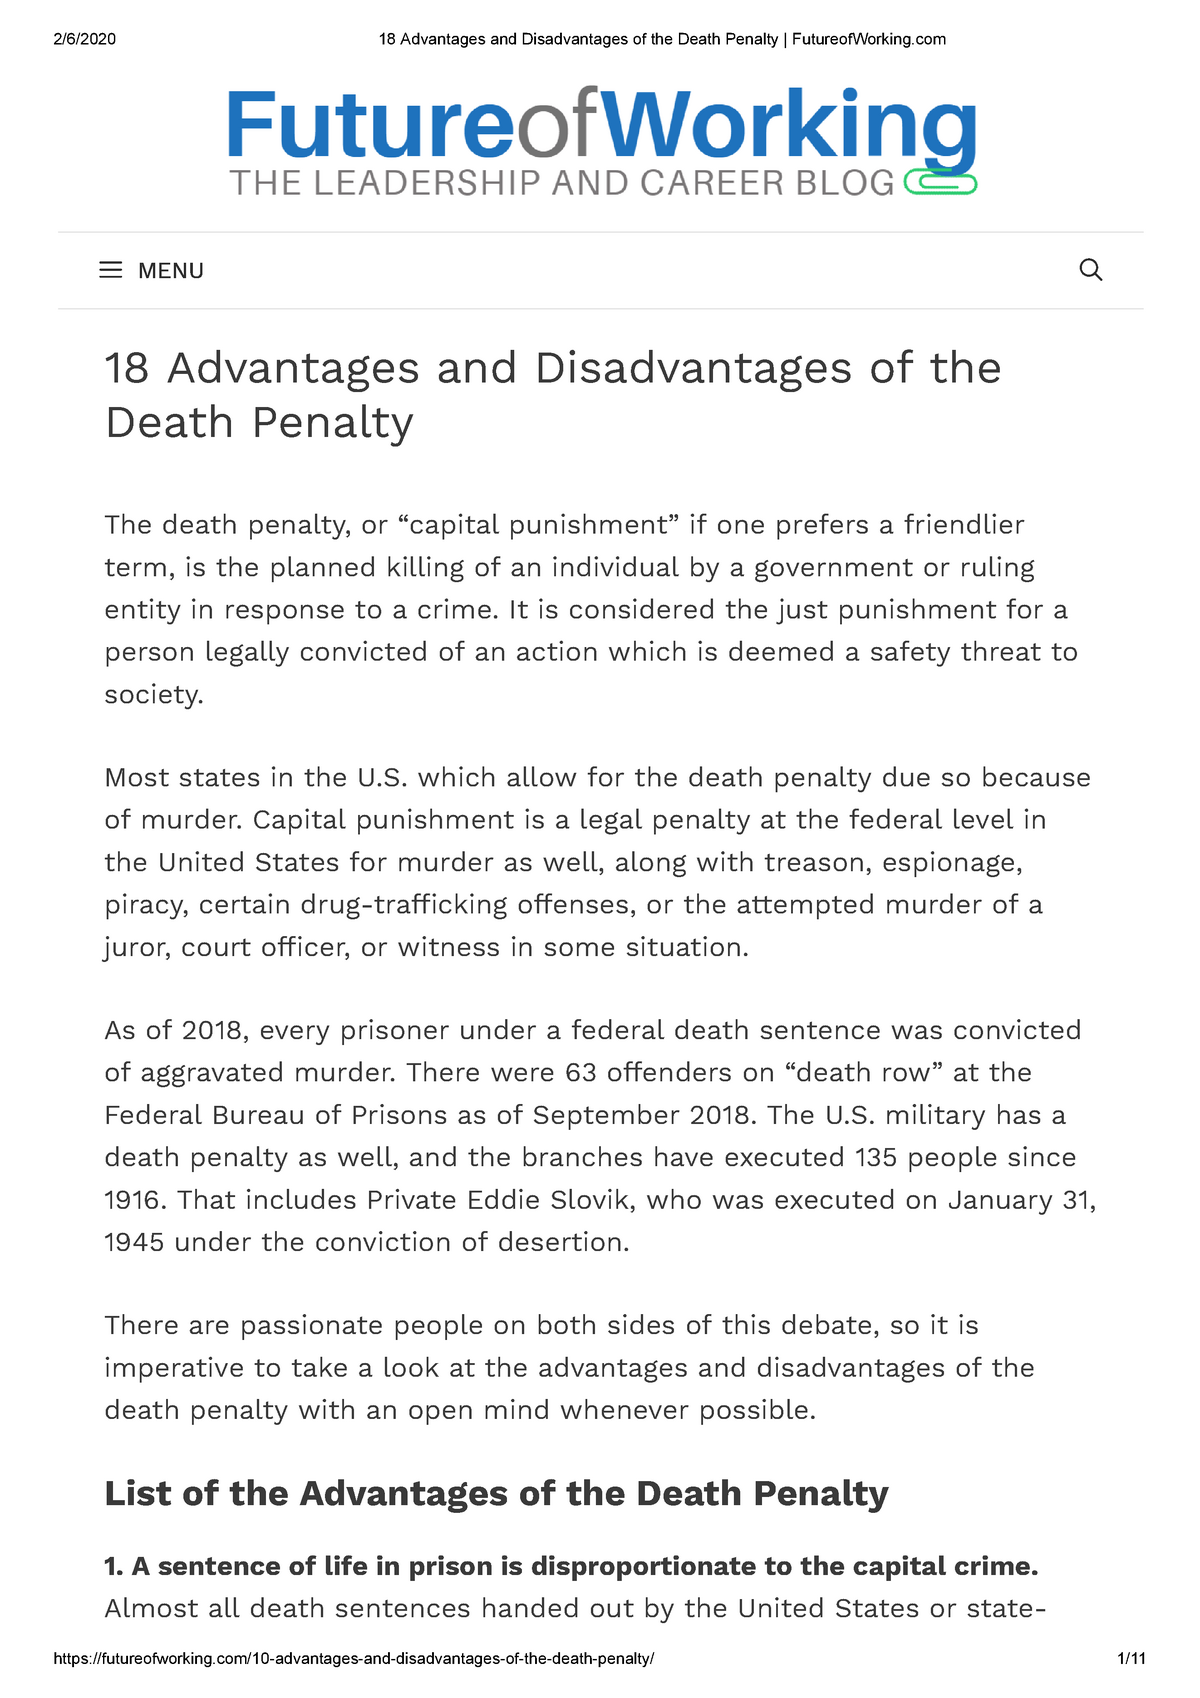 death penalty advantages and disadvantages essay